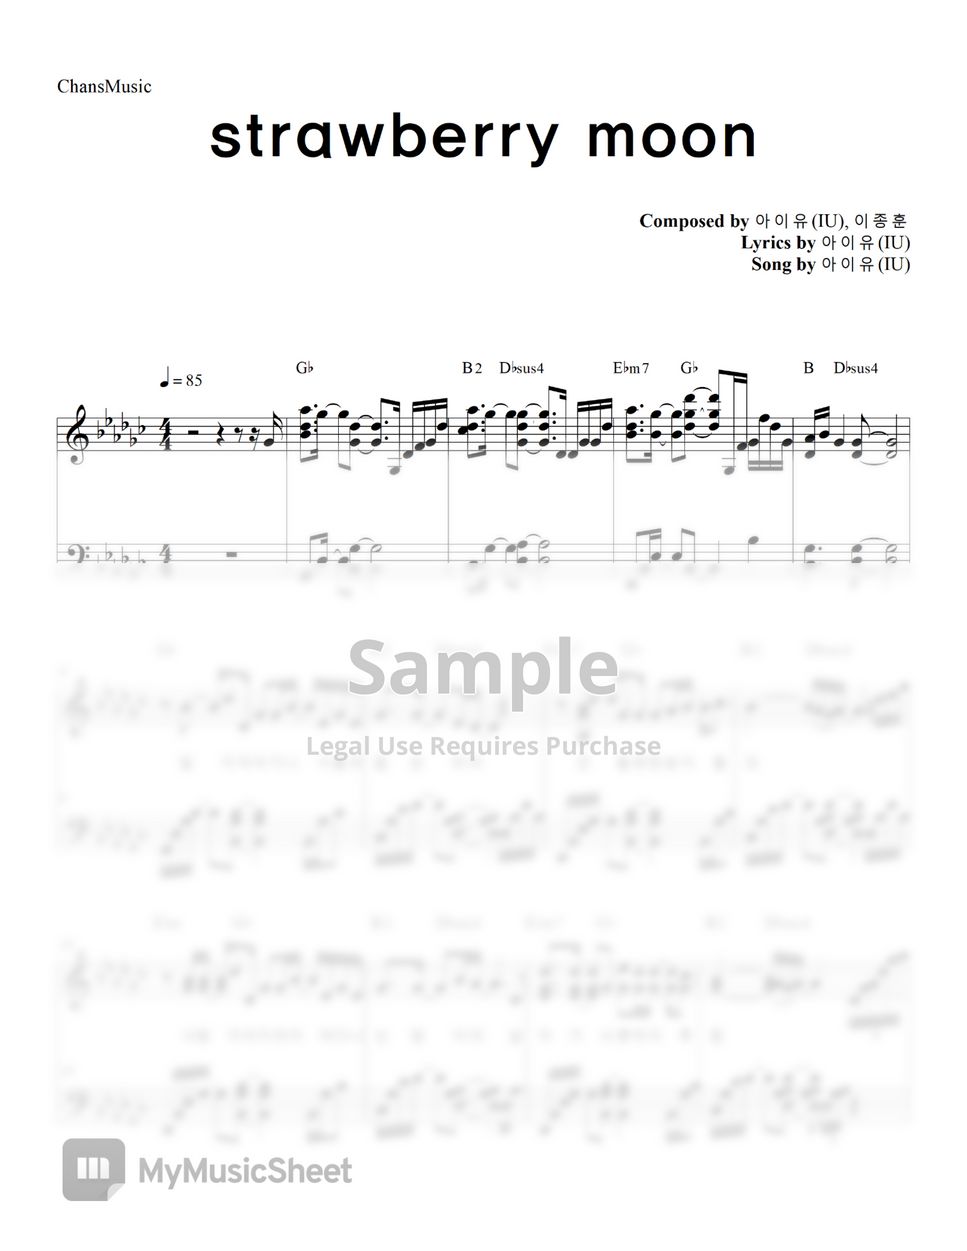 IU - strawberry moon (코드, 가사 포함) by ChansMusic